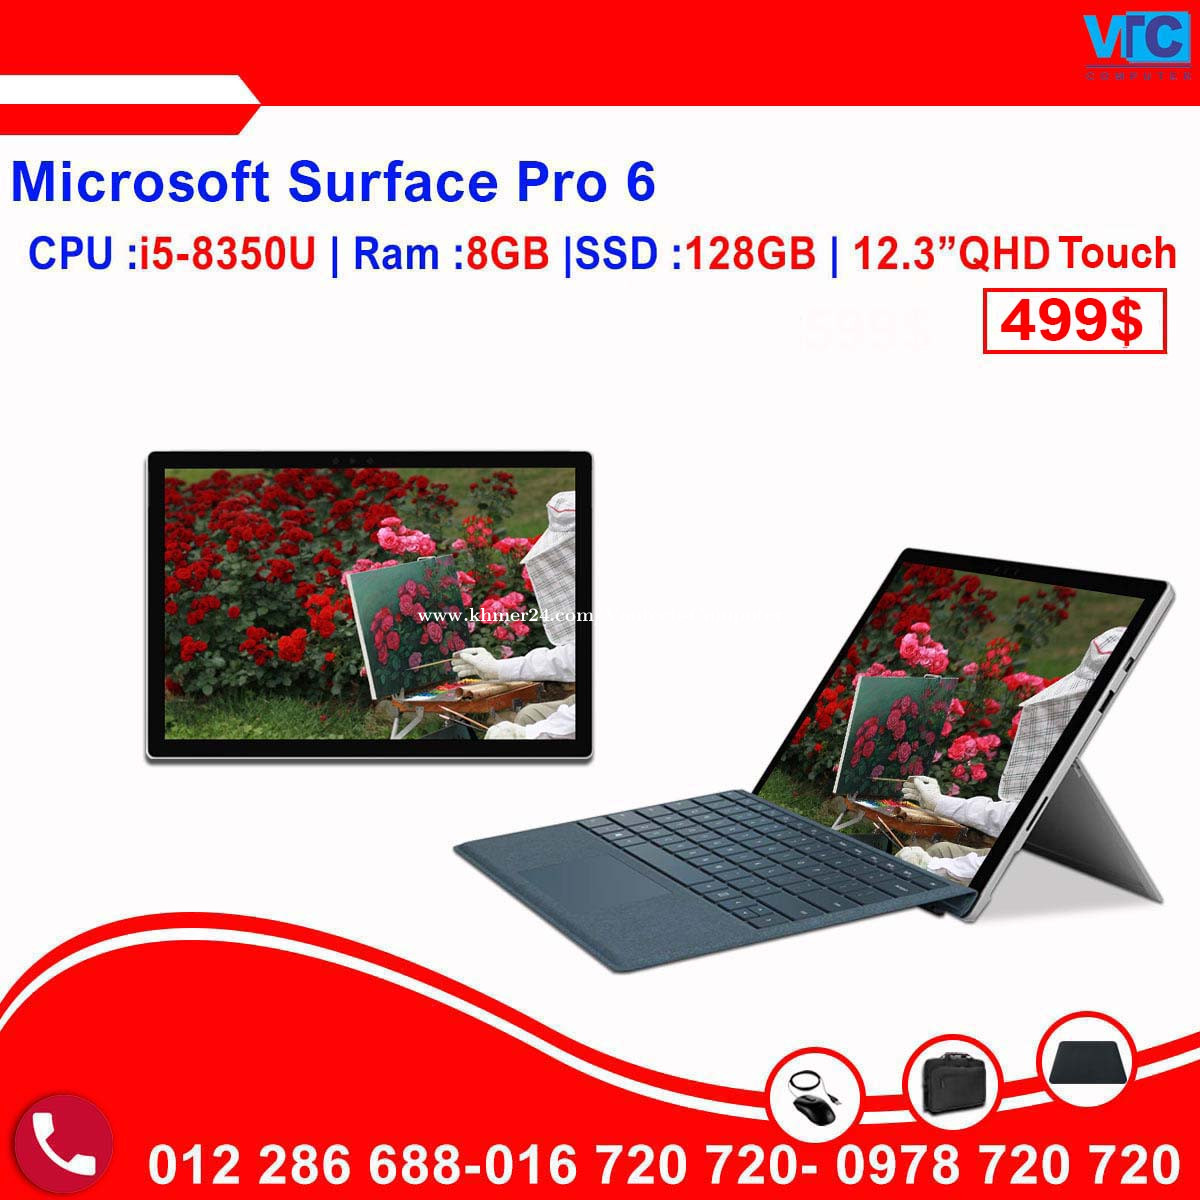 Surface Laptop 2 Price $649.00 in Mittakpheap, Cambodia - Vantech